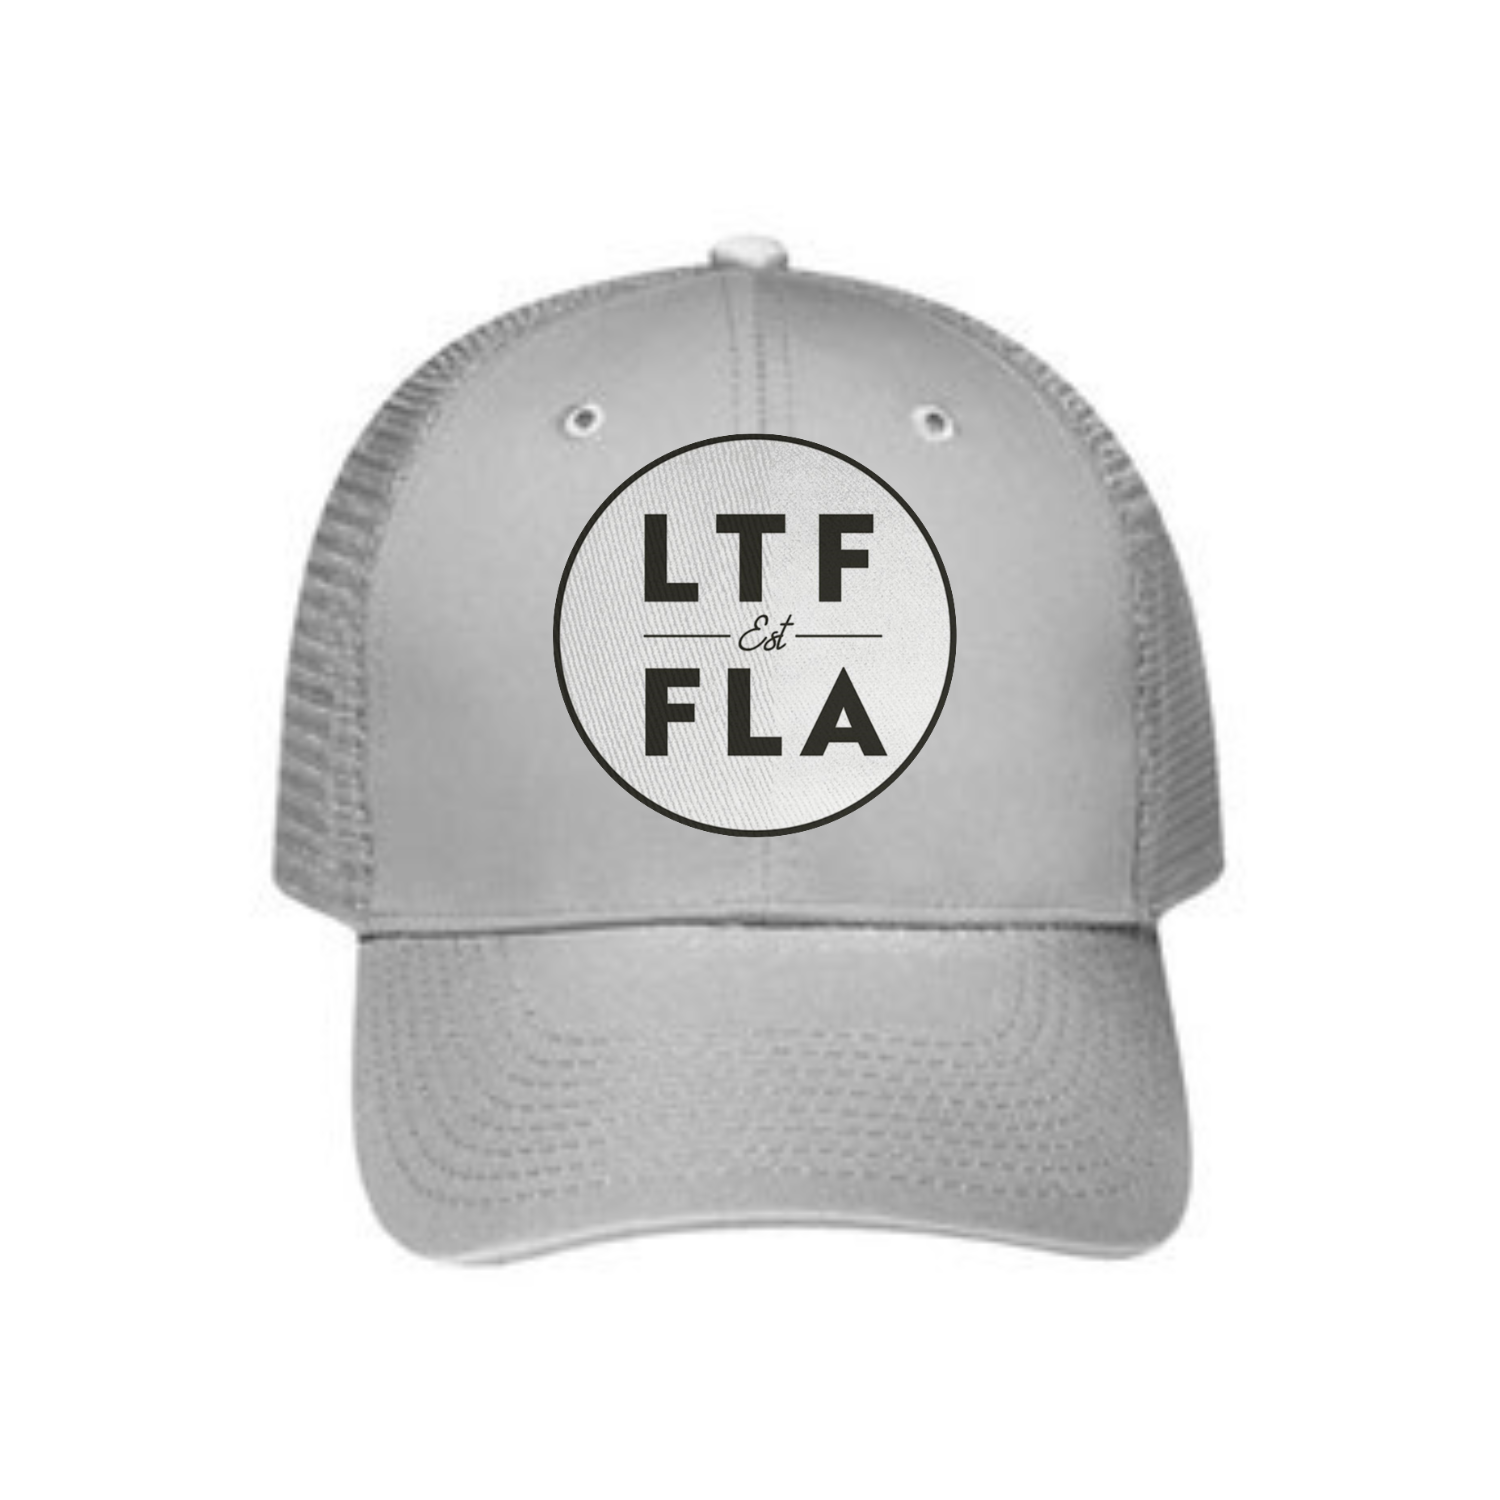 LTFFLA Established Floridian 6 Panel Cotton Twill Pro-Style Snap Back Trucker Hat